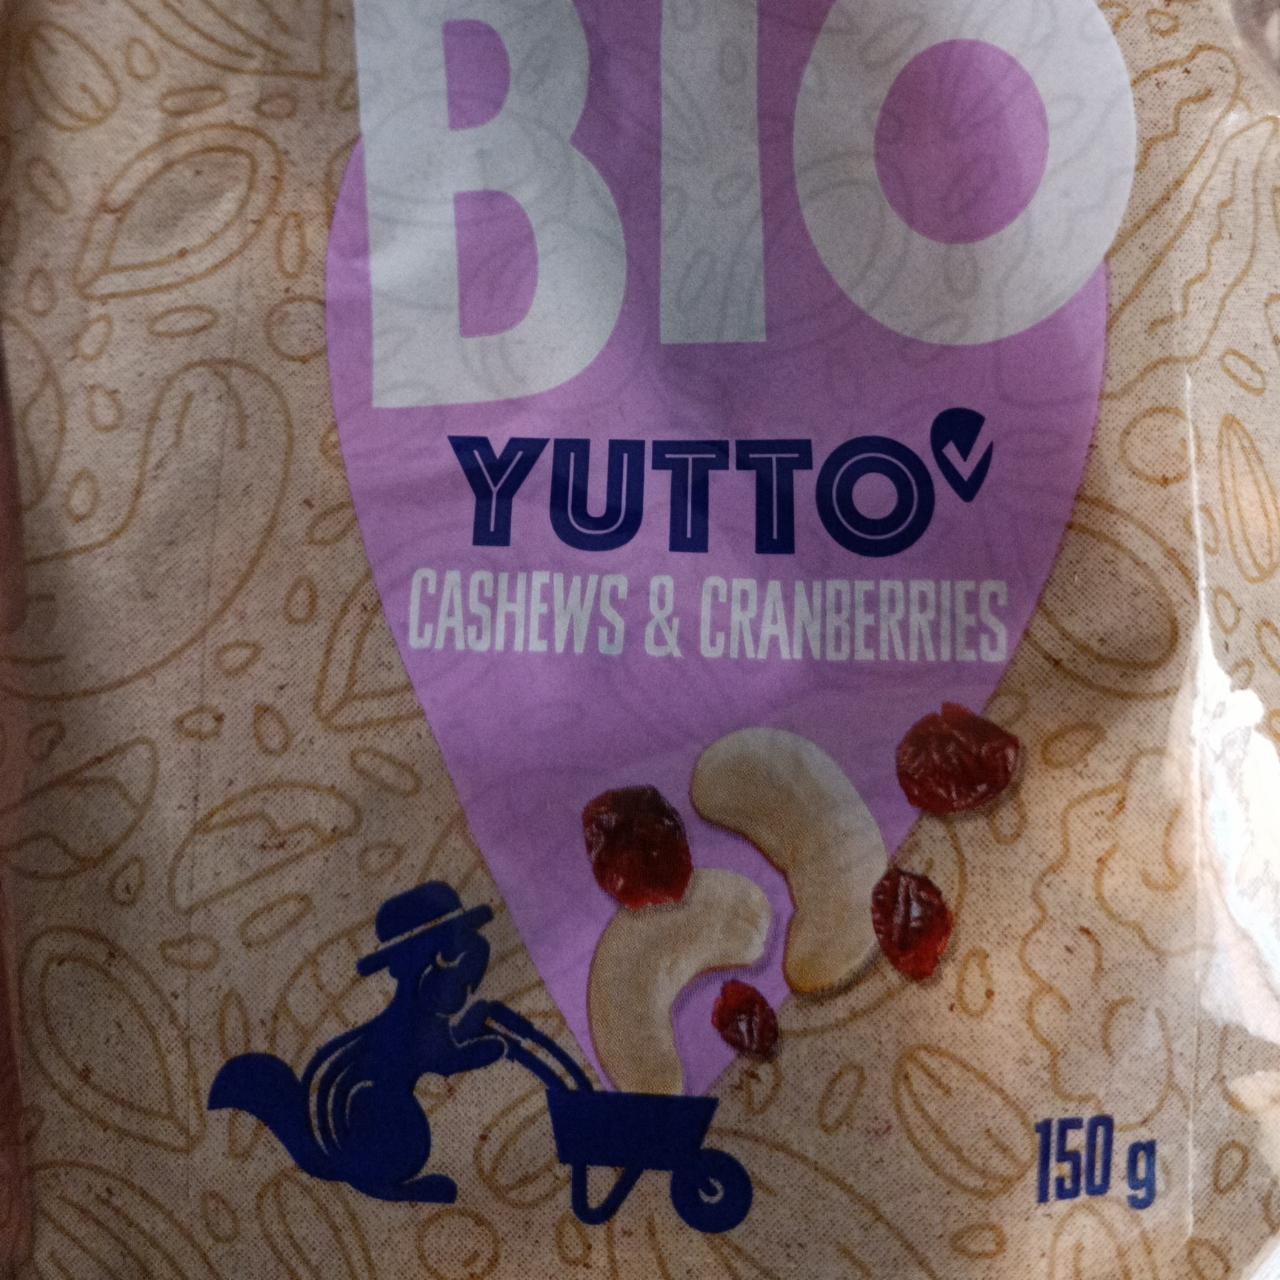 Fotografie - Bio Cashews & cranberries Yutto